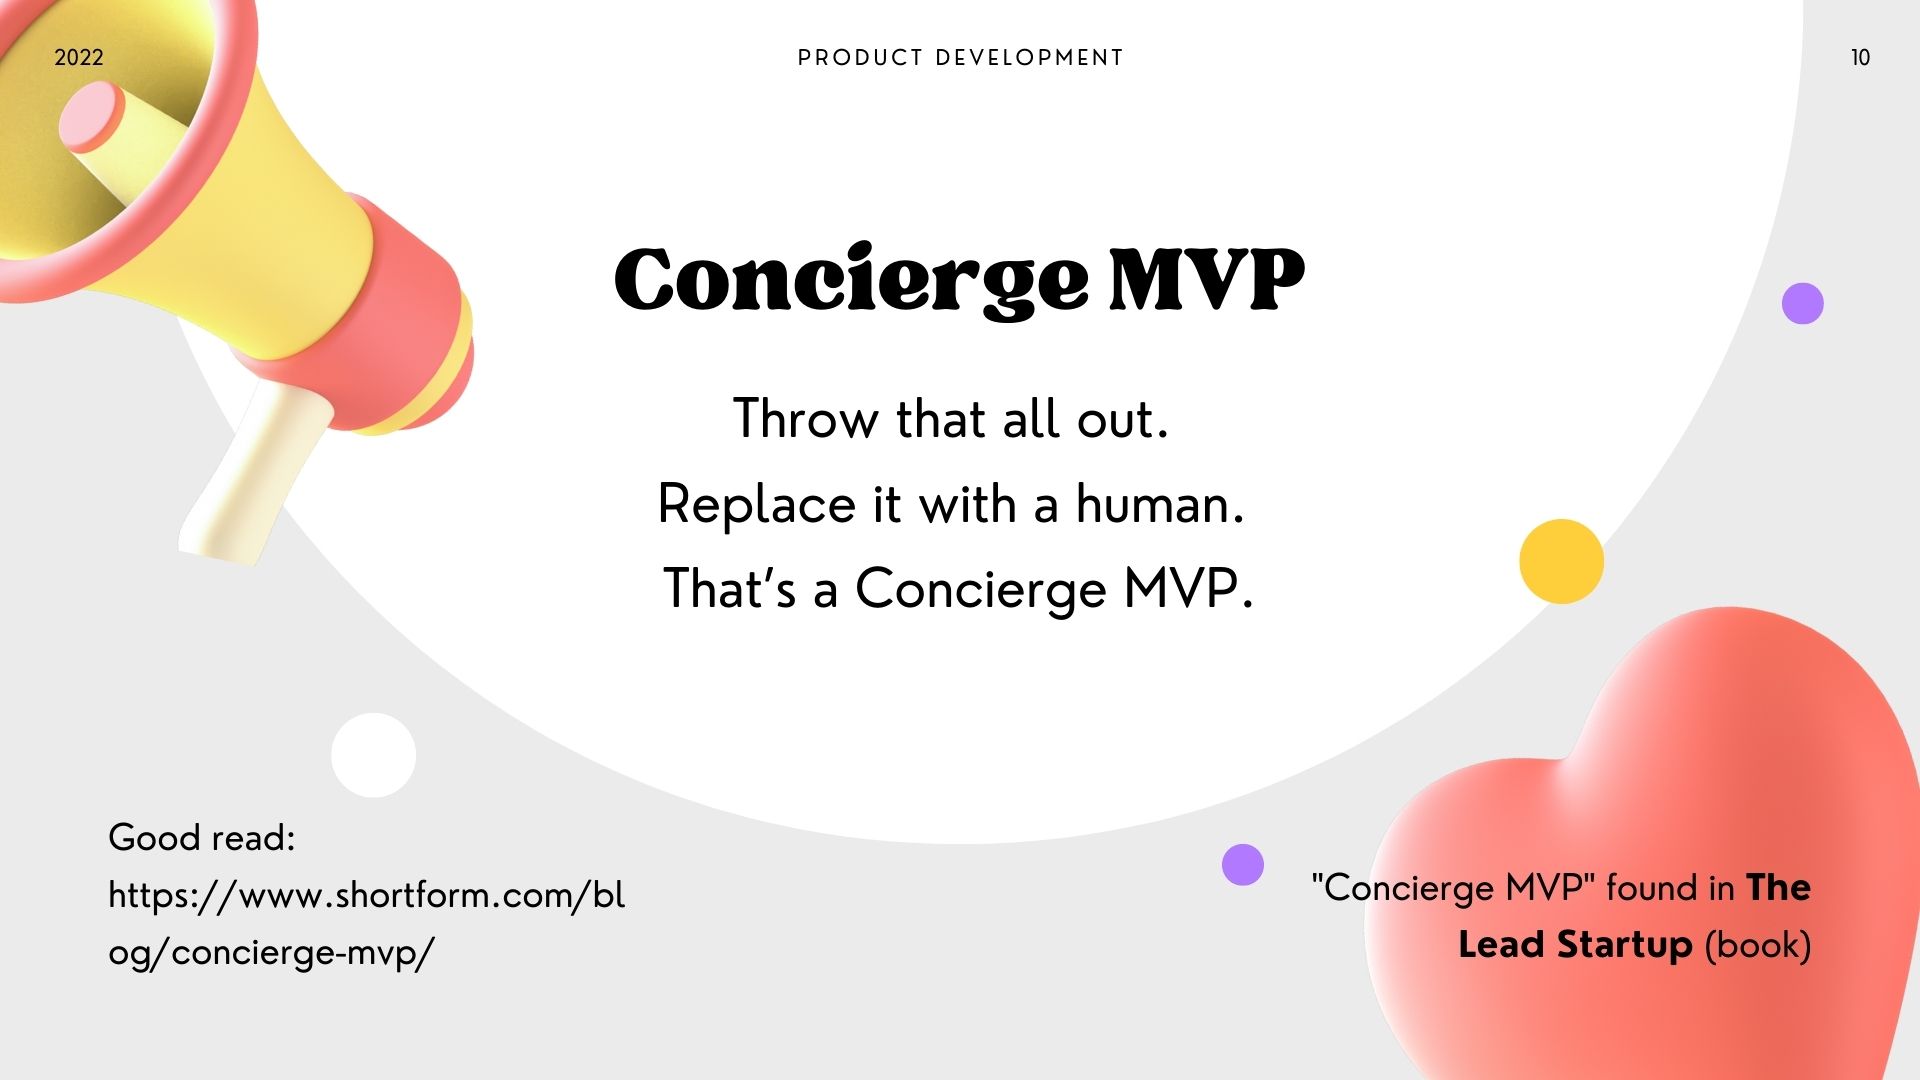 An image explaing the concept of a Concierge MVP